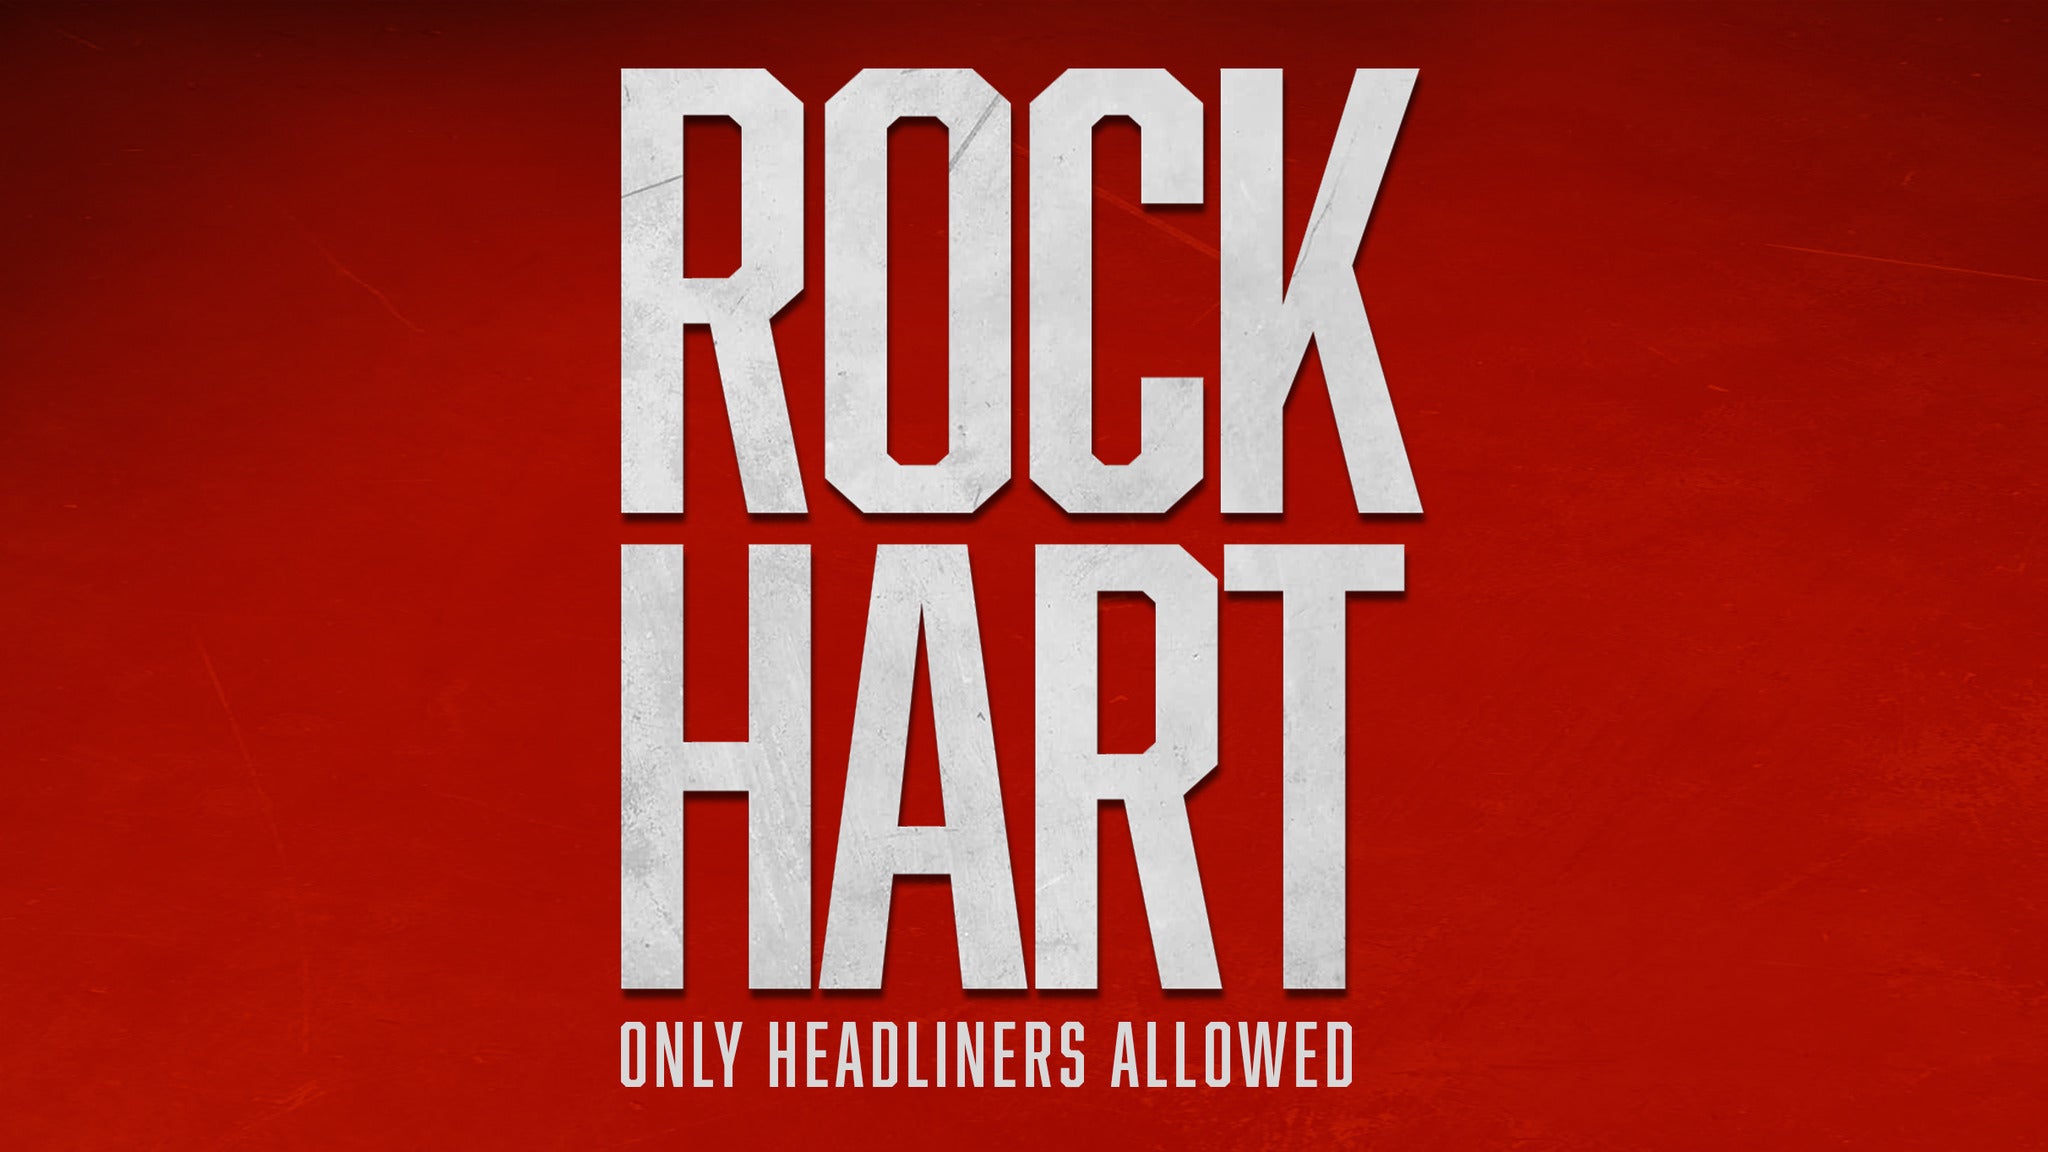 Rock Hart: Only Headliners Allowed in Newark promo photo for Artist presale offer code